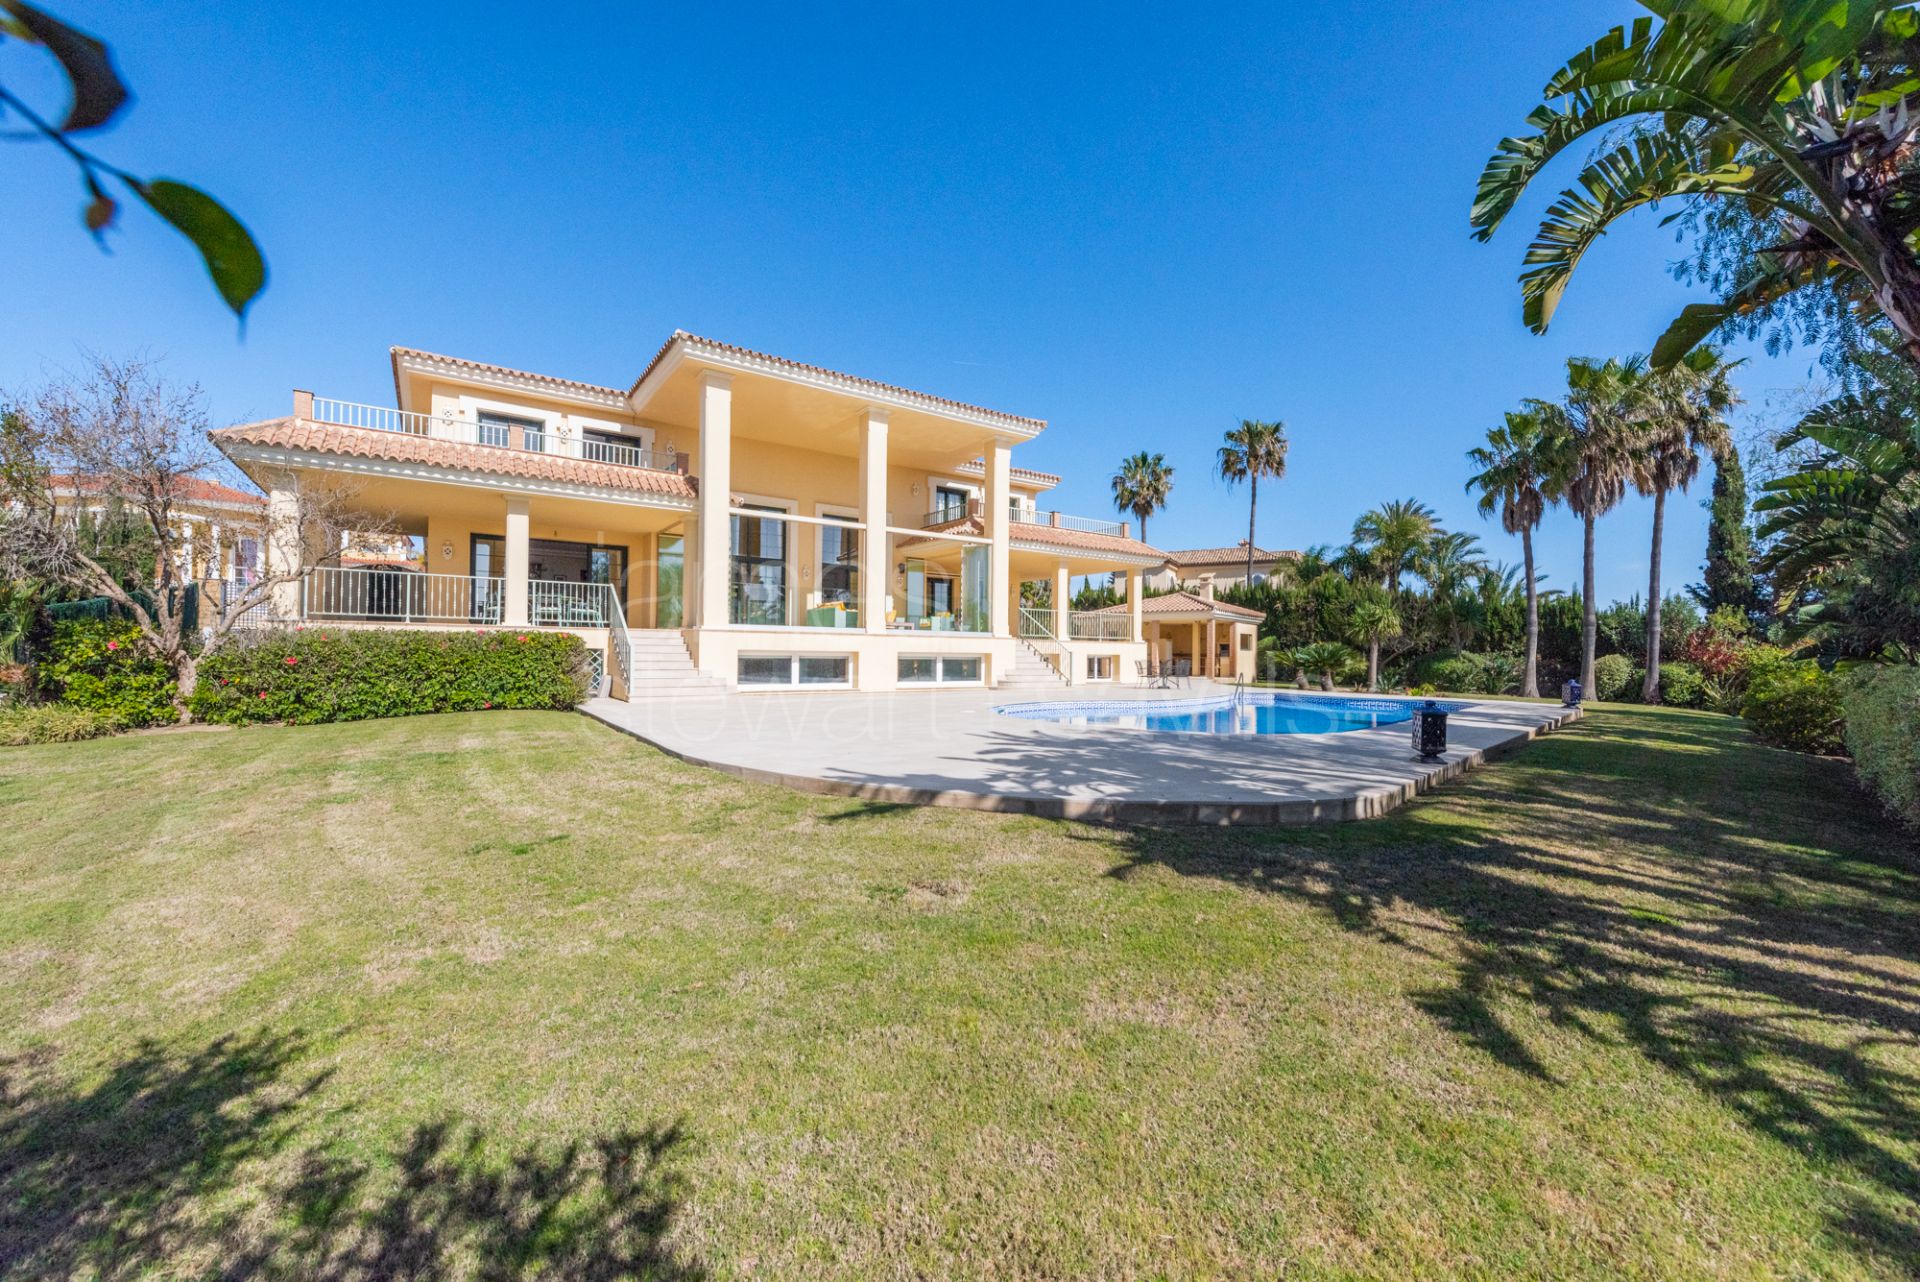 Villa with Sea Views near So-Sotogrande Hotel and Almenara Golf Course